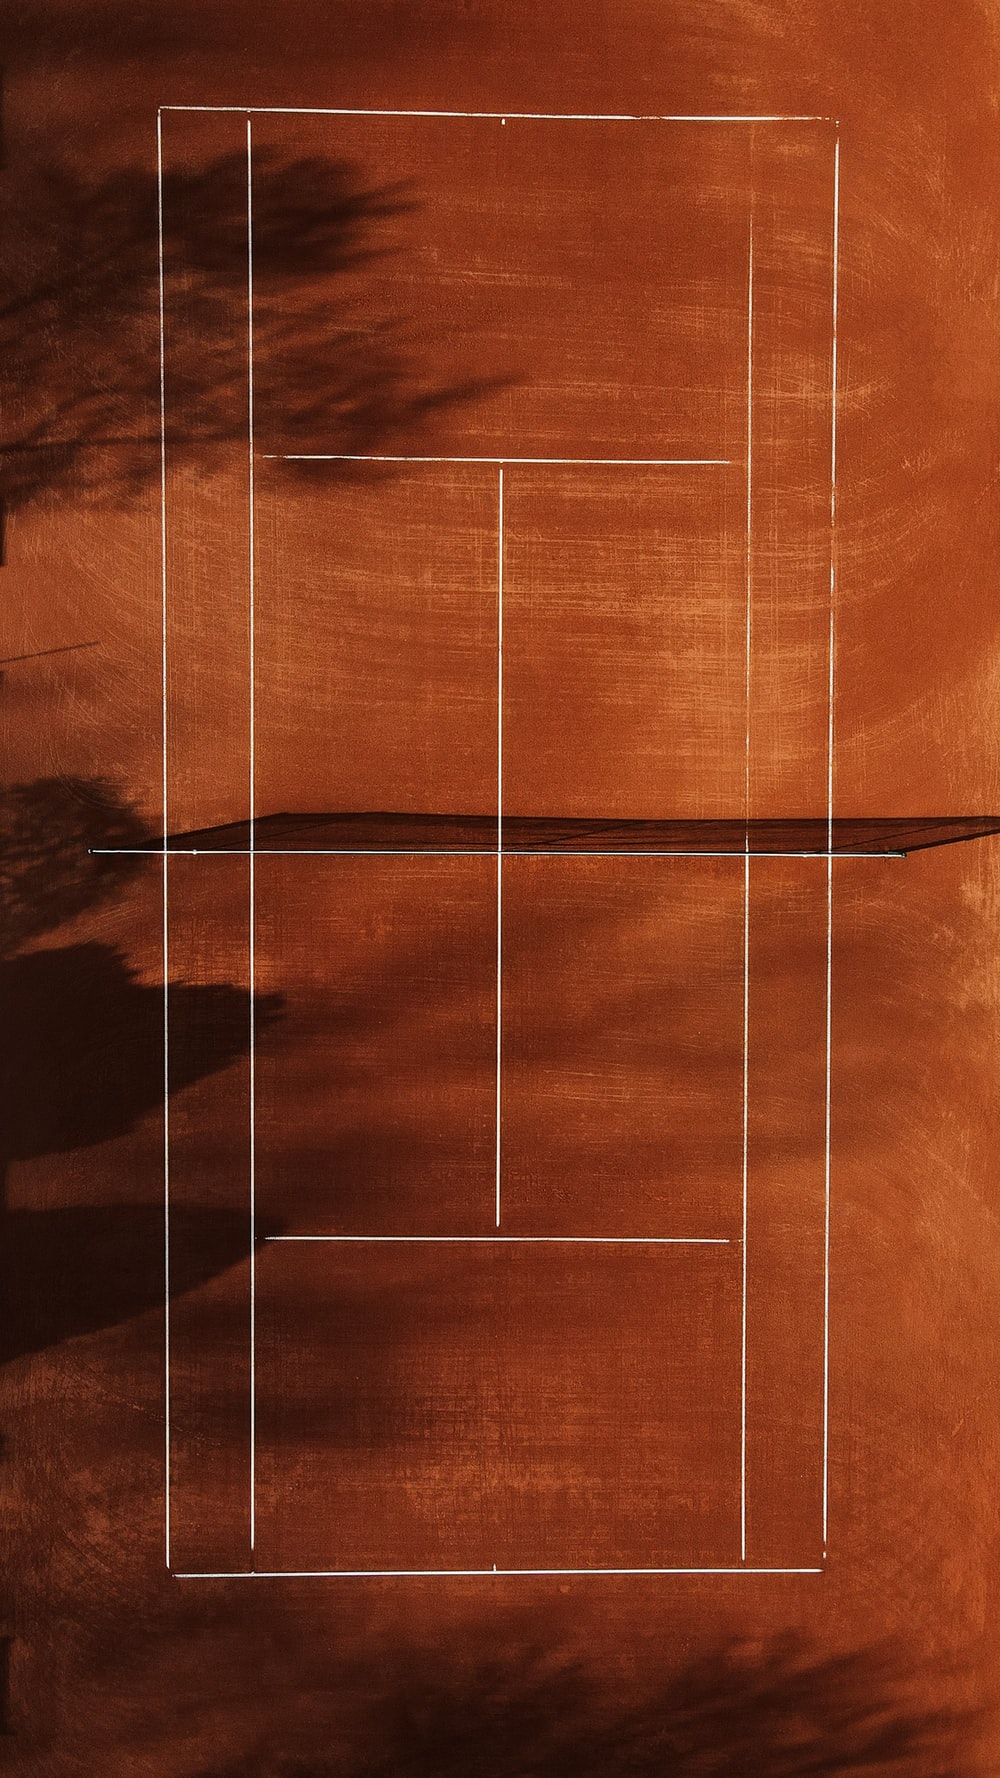 Tennis Court Wallpapers